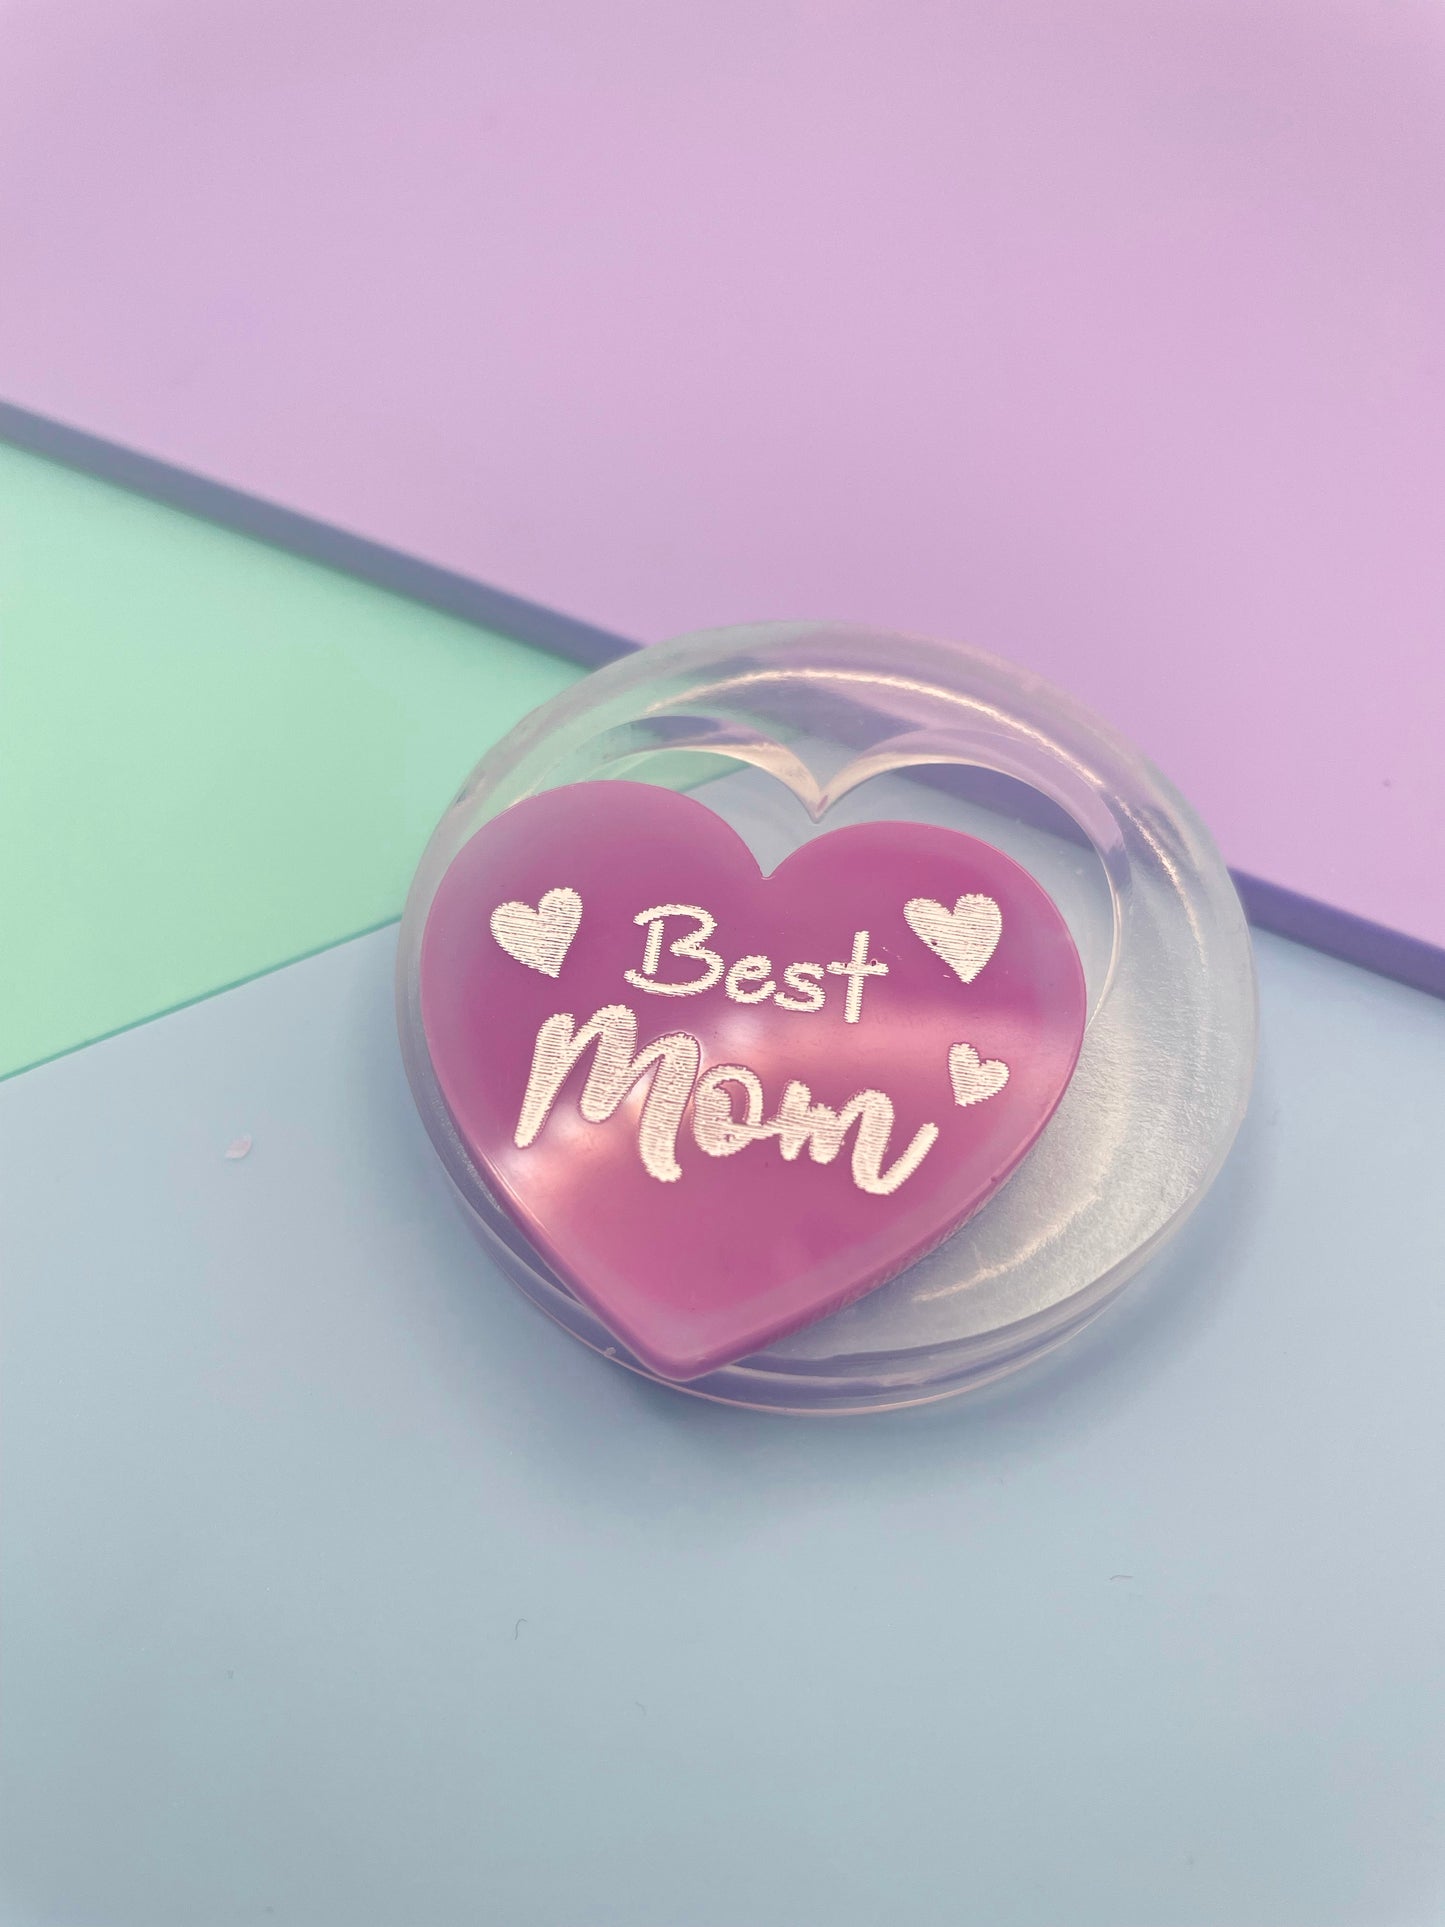 Best Mom badge mold pin brooch keychain